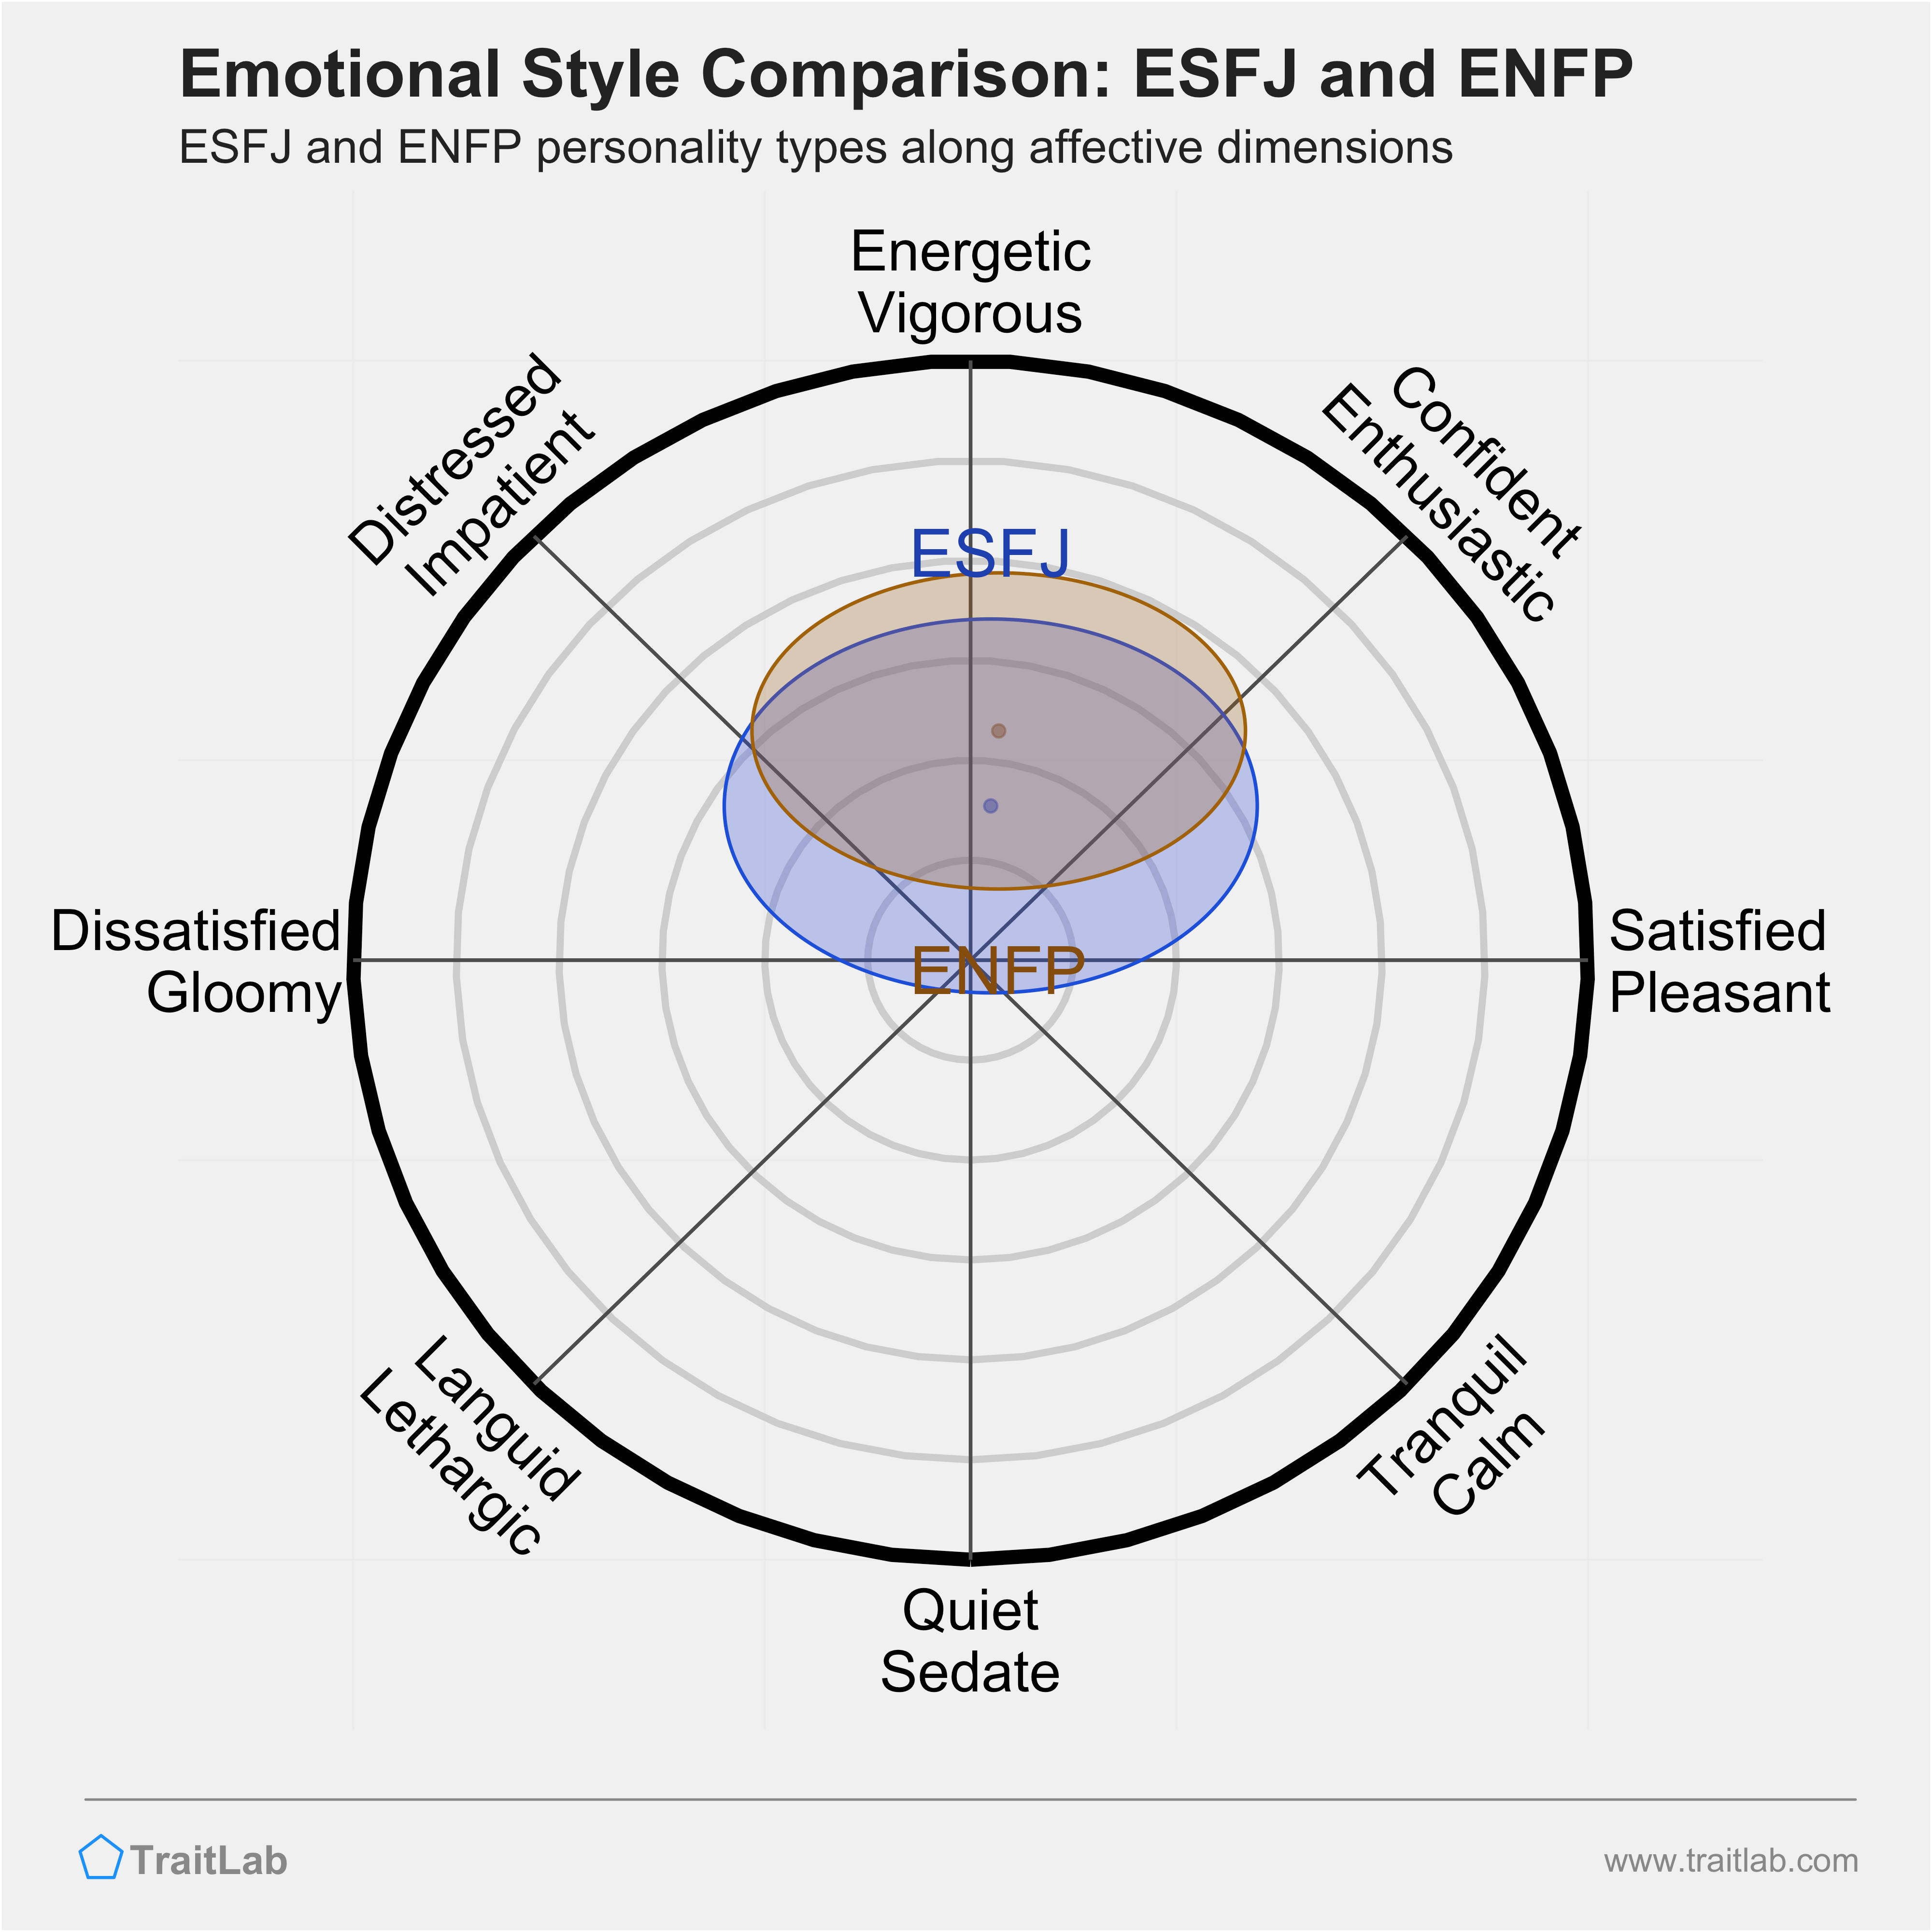 ESFJ and ENFP comparison across emotional (affective) dimensions